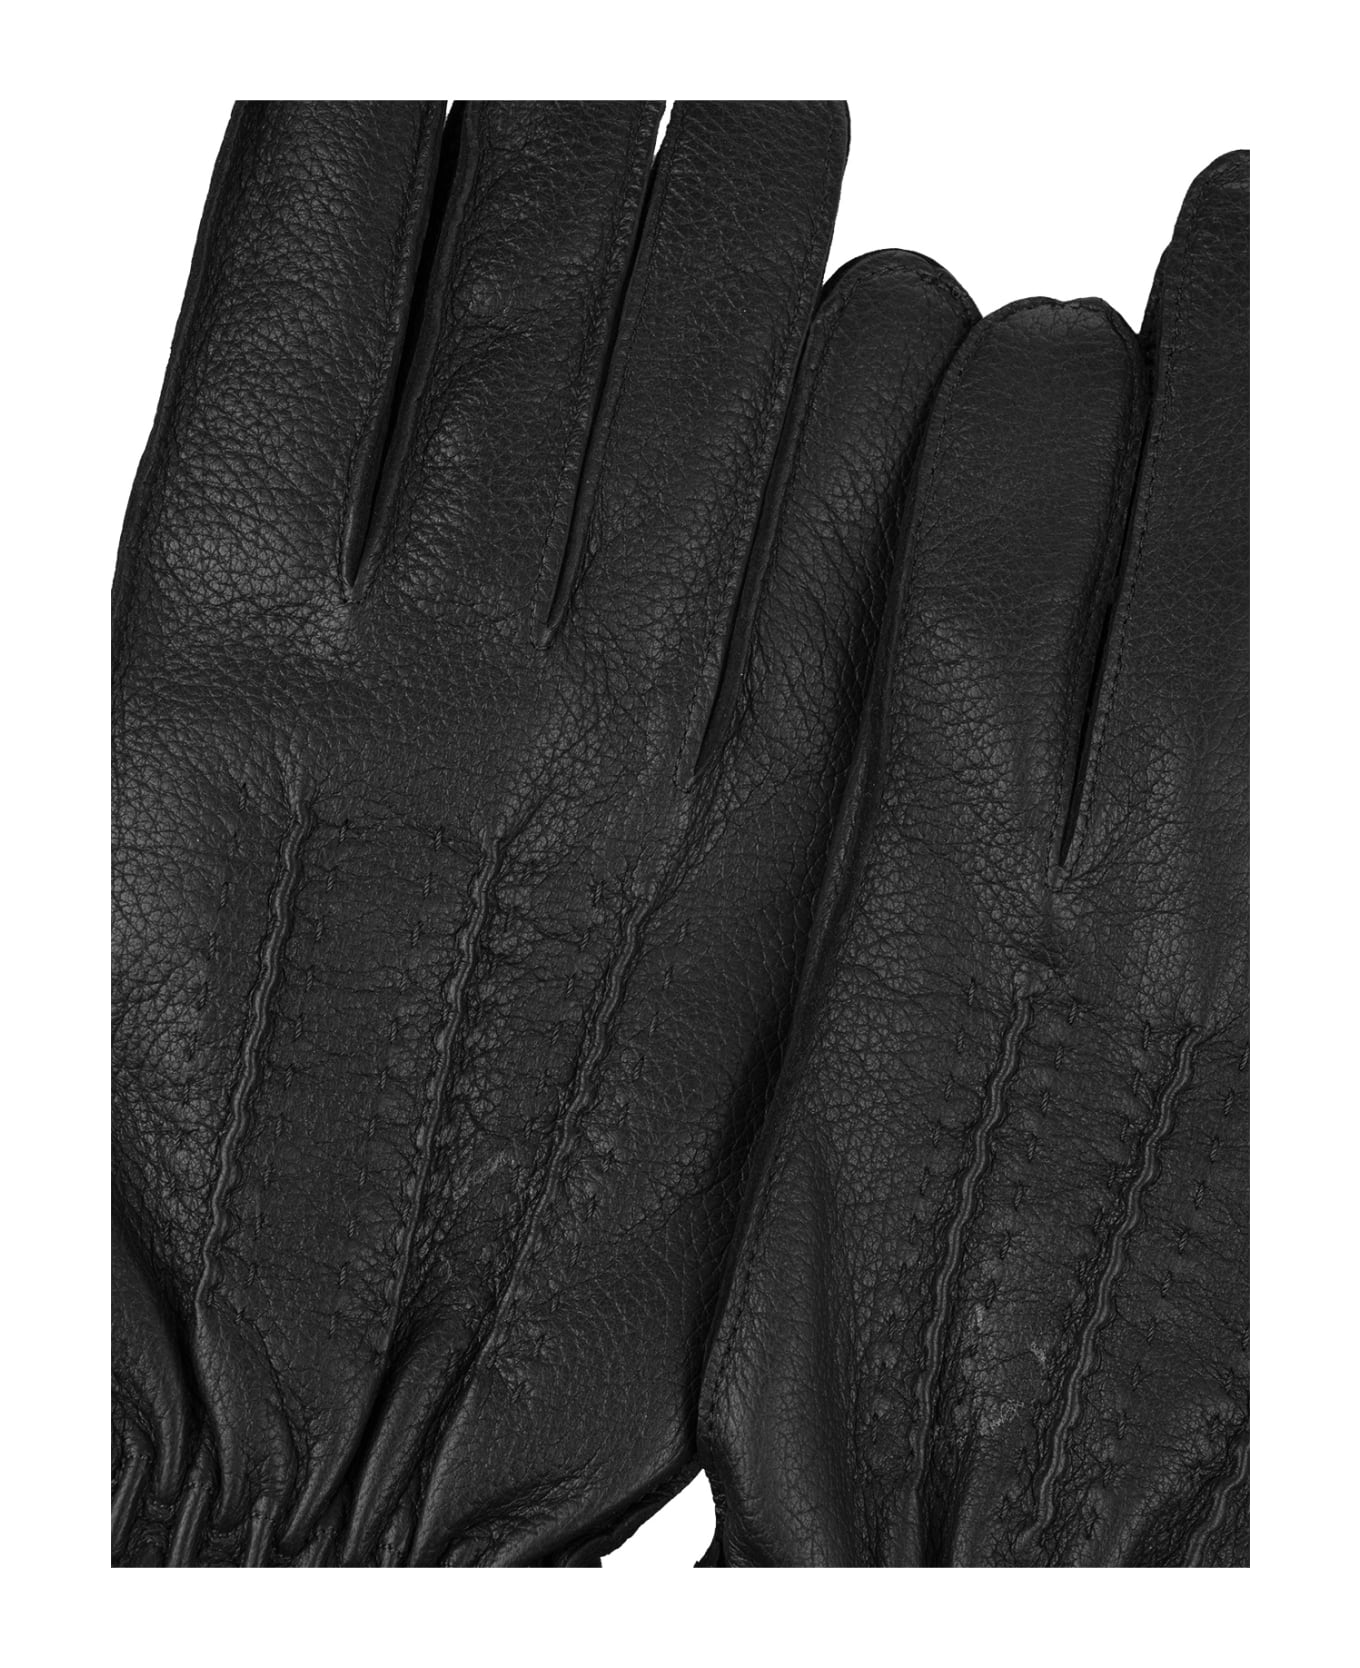 Orciani Drummed Gloves In Black Leather - Black